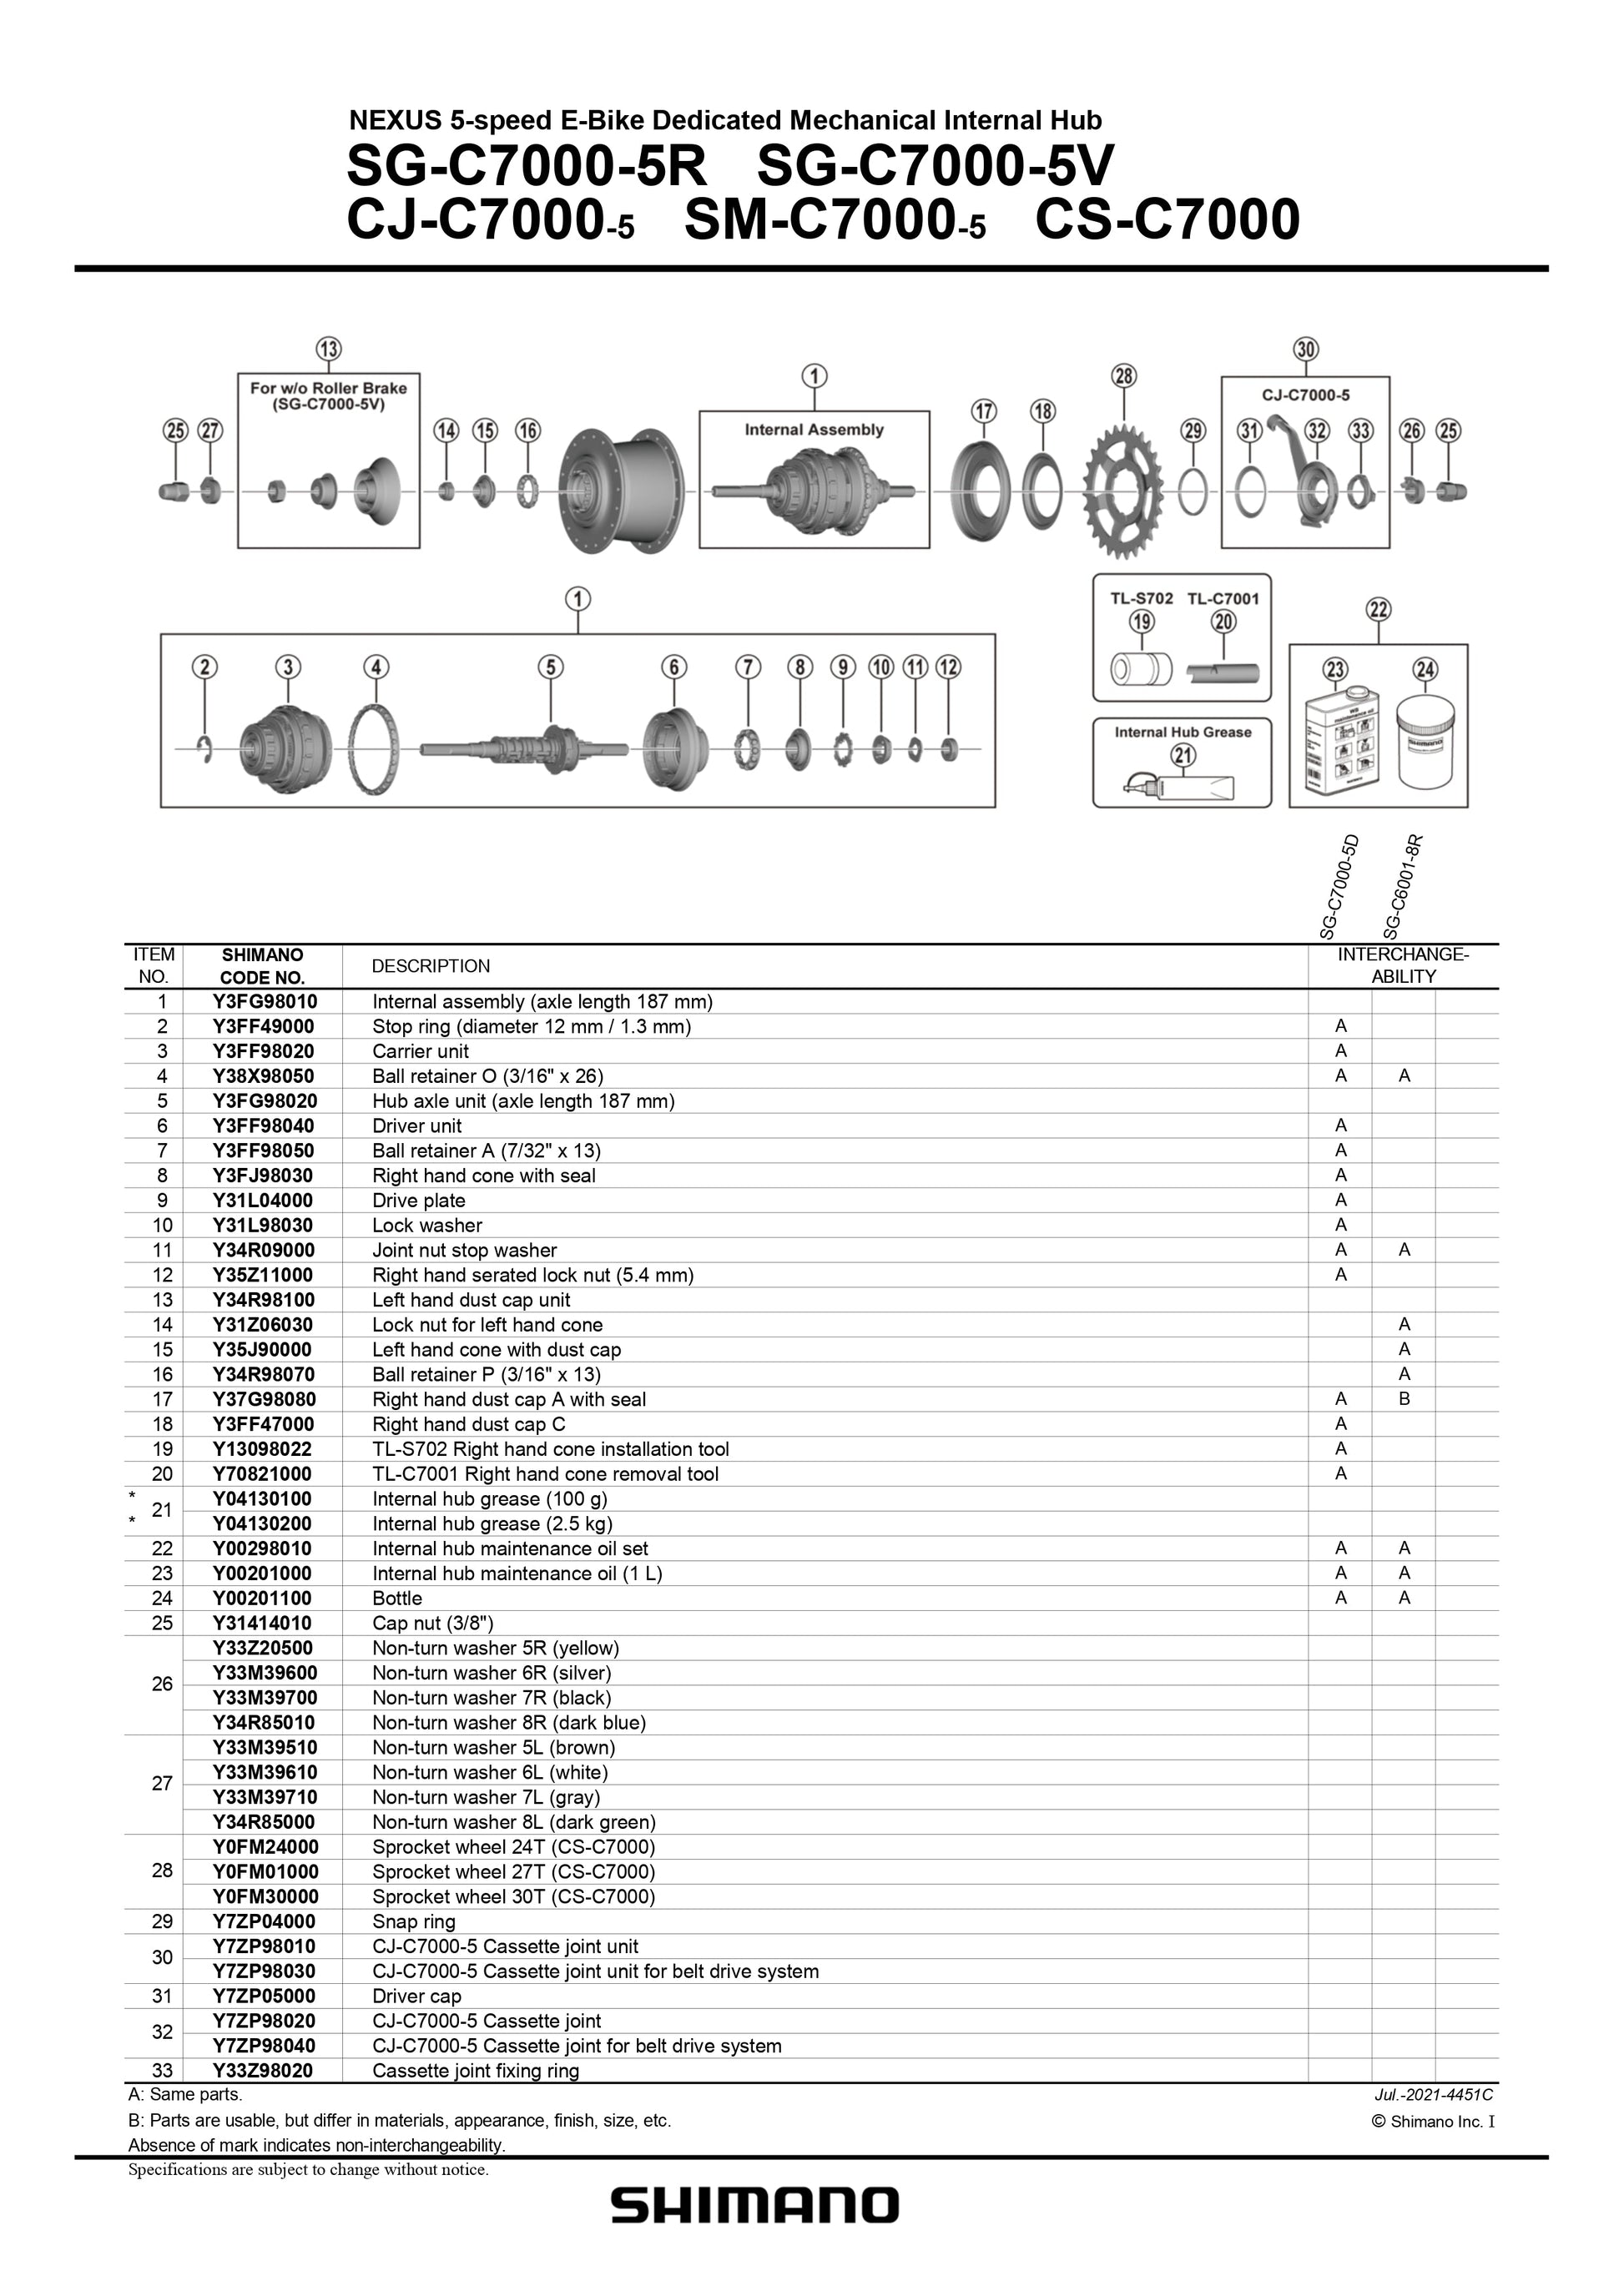 SHIMANO Nexus SG-C7000-5R5V Internal Hub 8-Speed Internal Assembly Axle Length 187 mm - Y3FG98010-Pit Crew Cycles